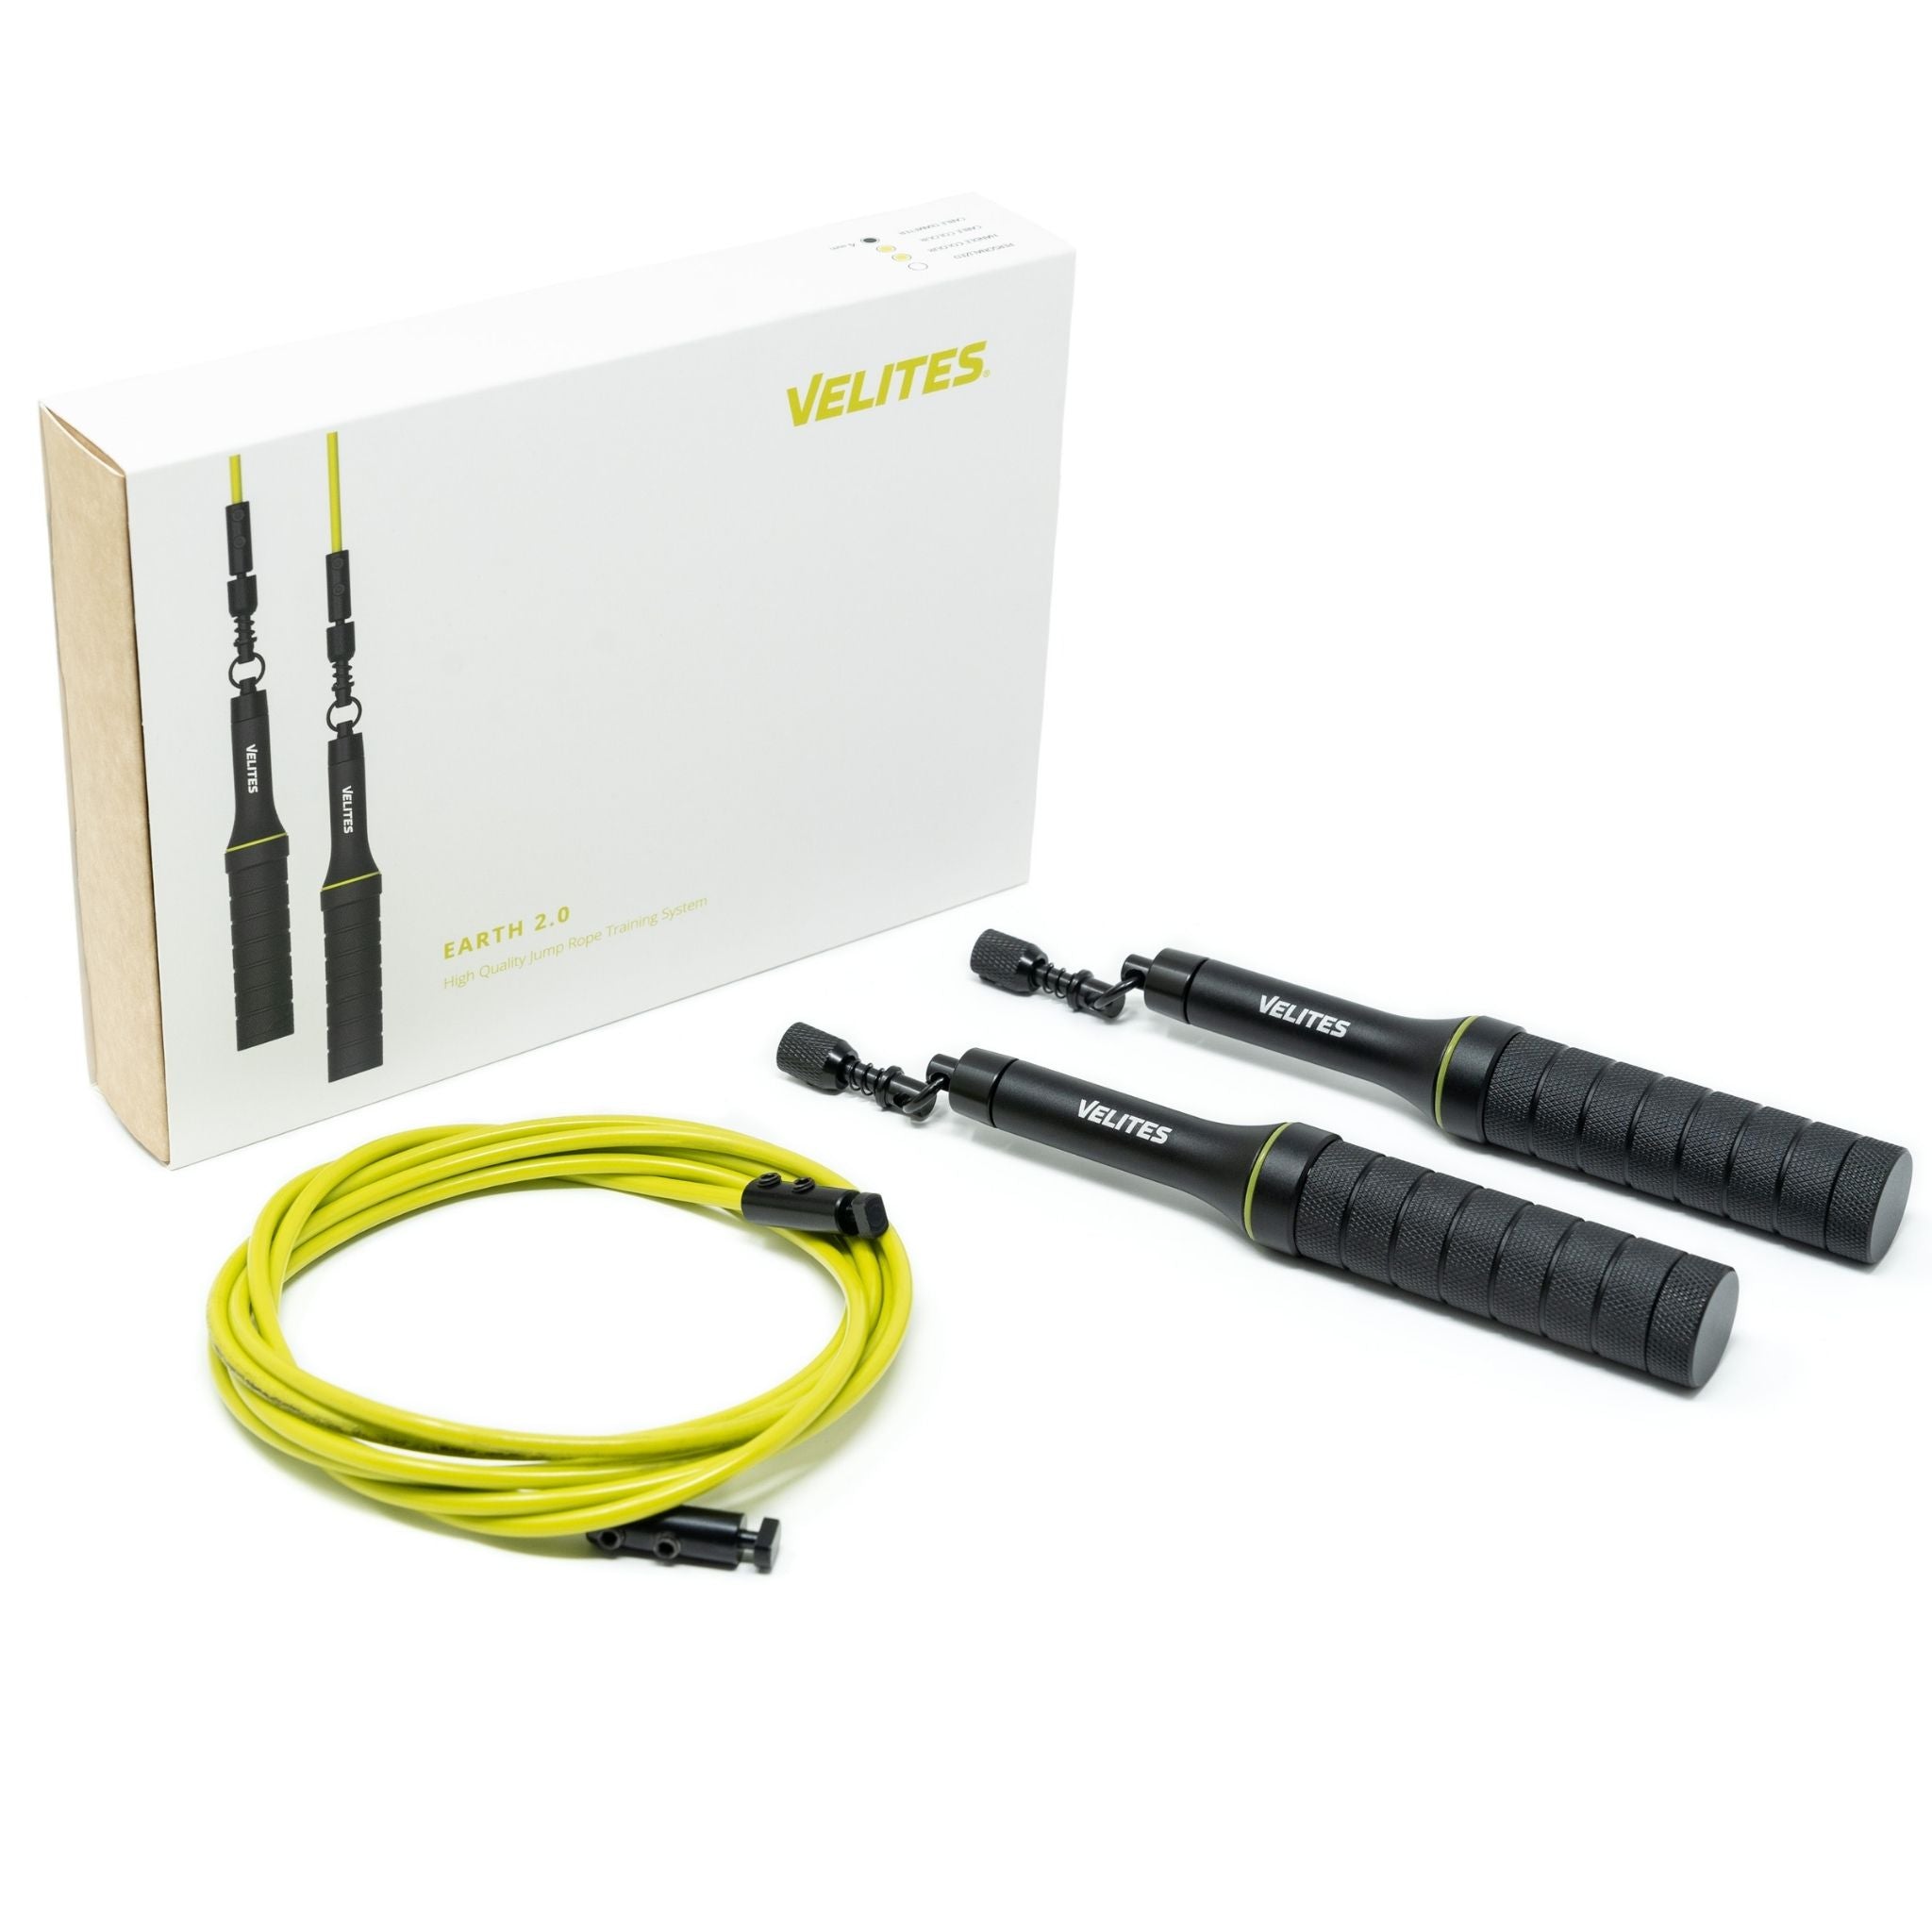 Velites Pack Comba Earth 2.0 + Lastres + Cables + Mat (Kamo) : :  Deportes y aire libre